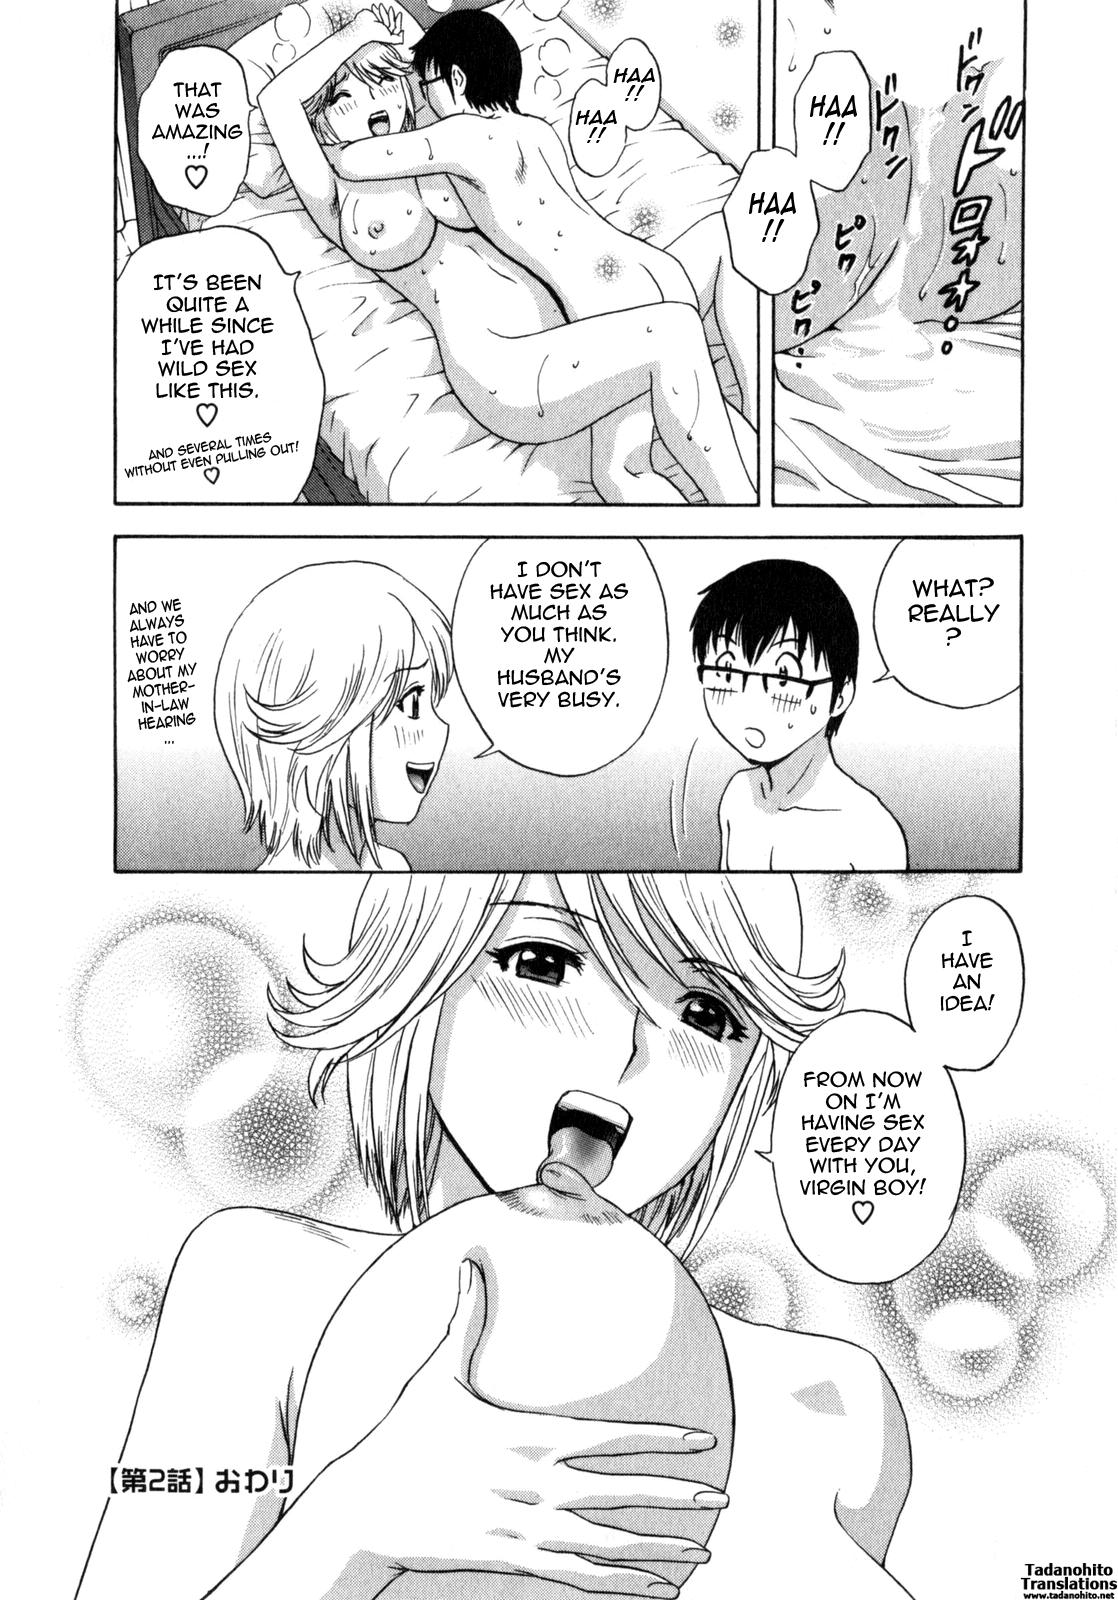 [Hidemaru] Life with Married Women Just Like a Manga 1 - Ch. 1-7 [English] {Tadanohito} 43